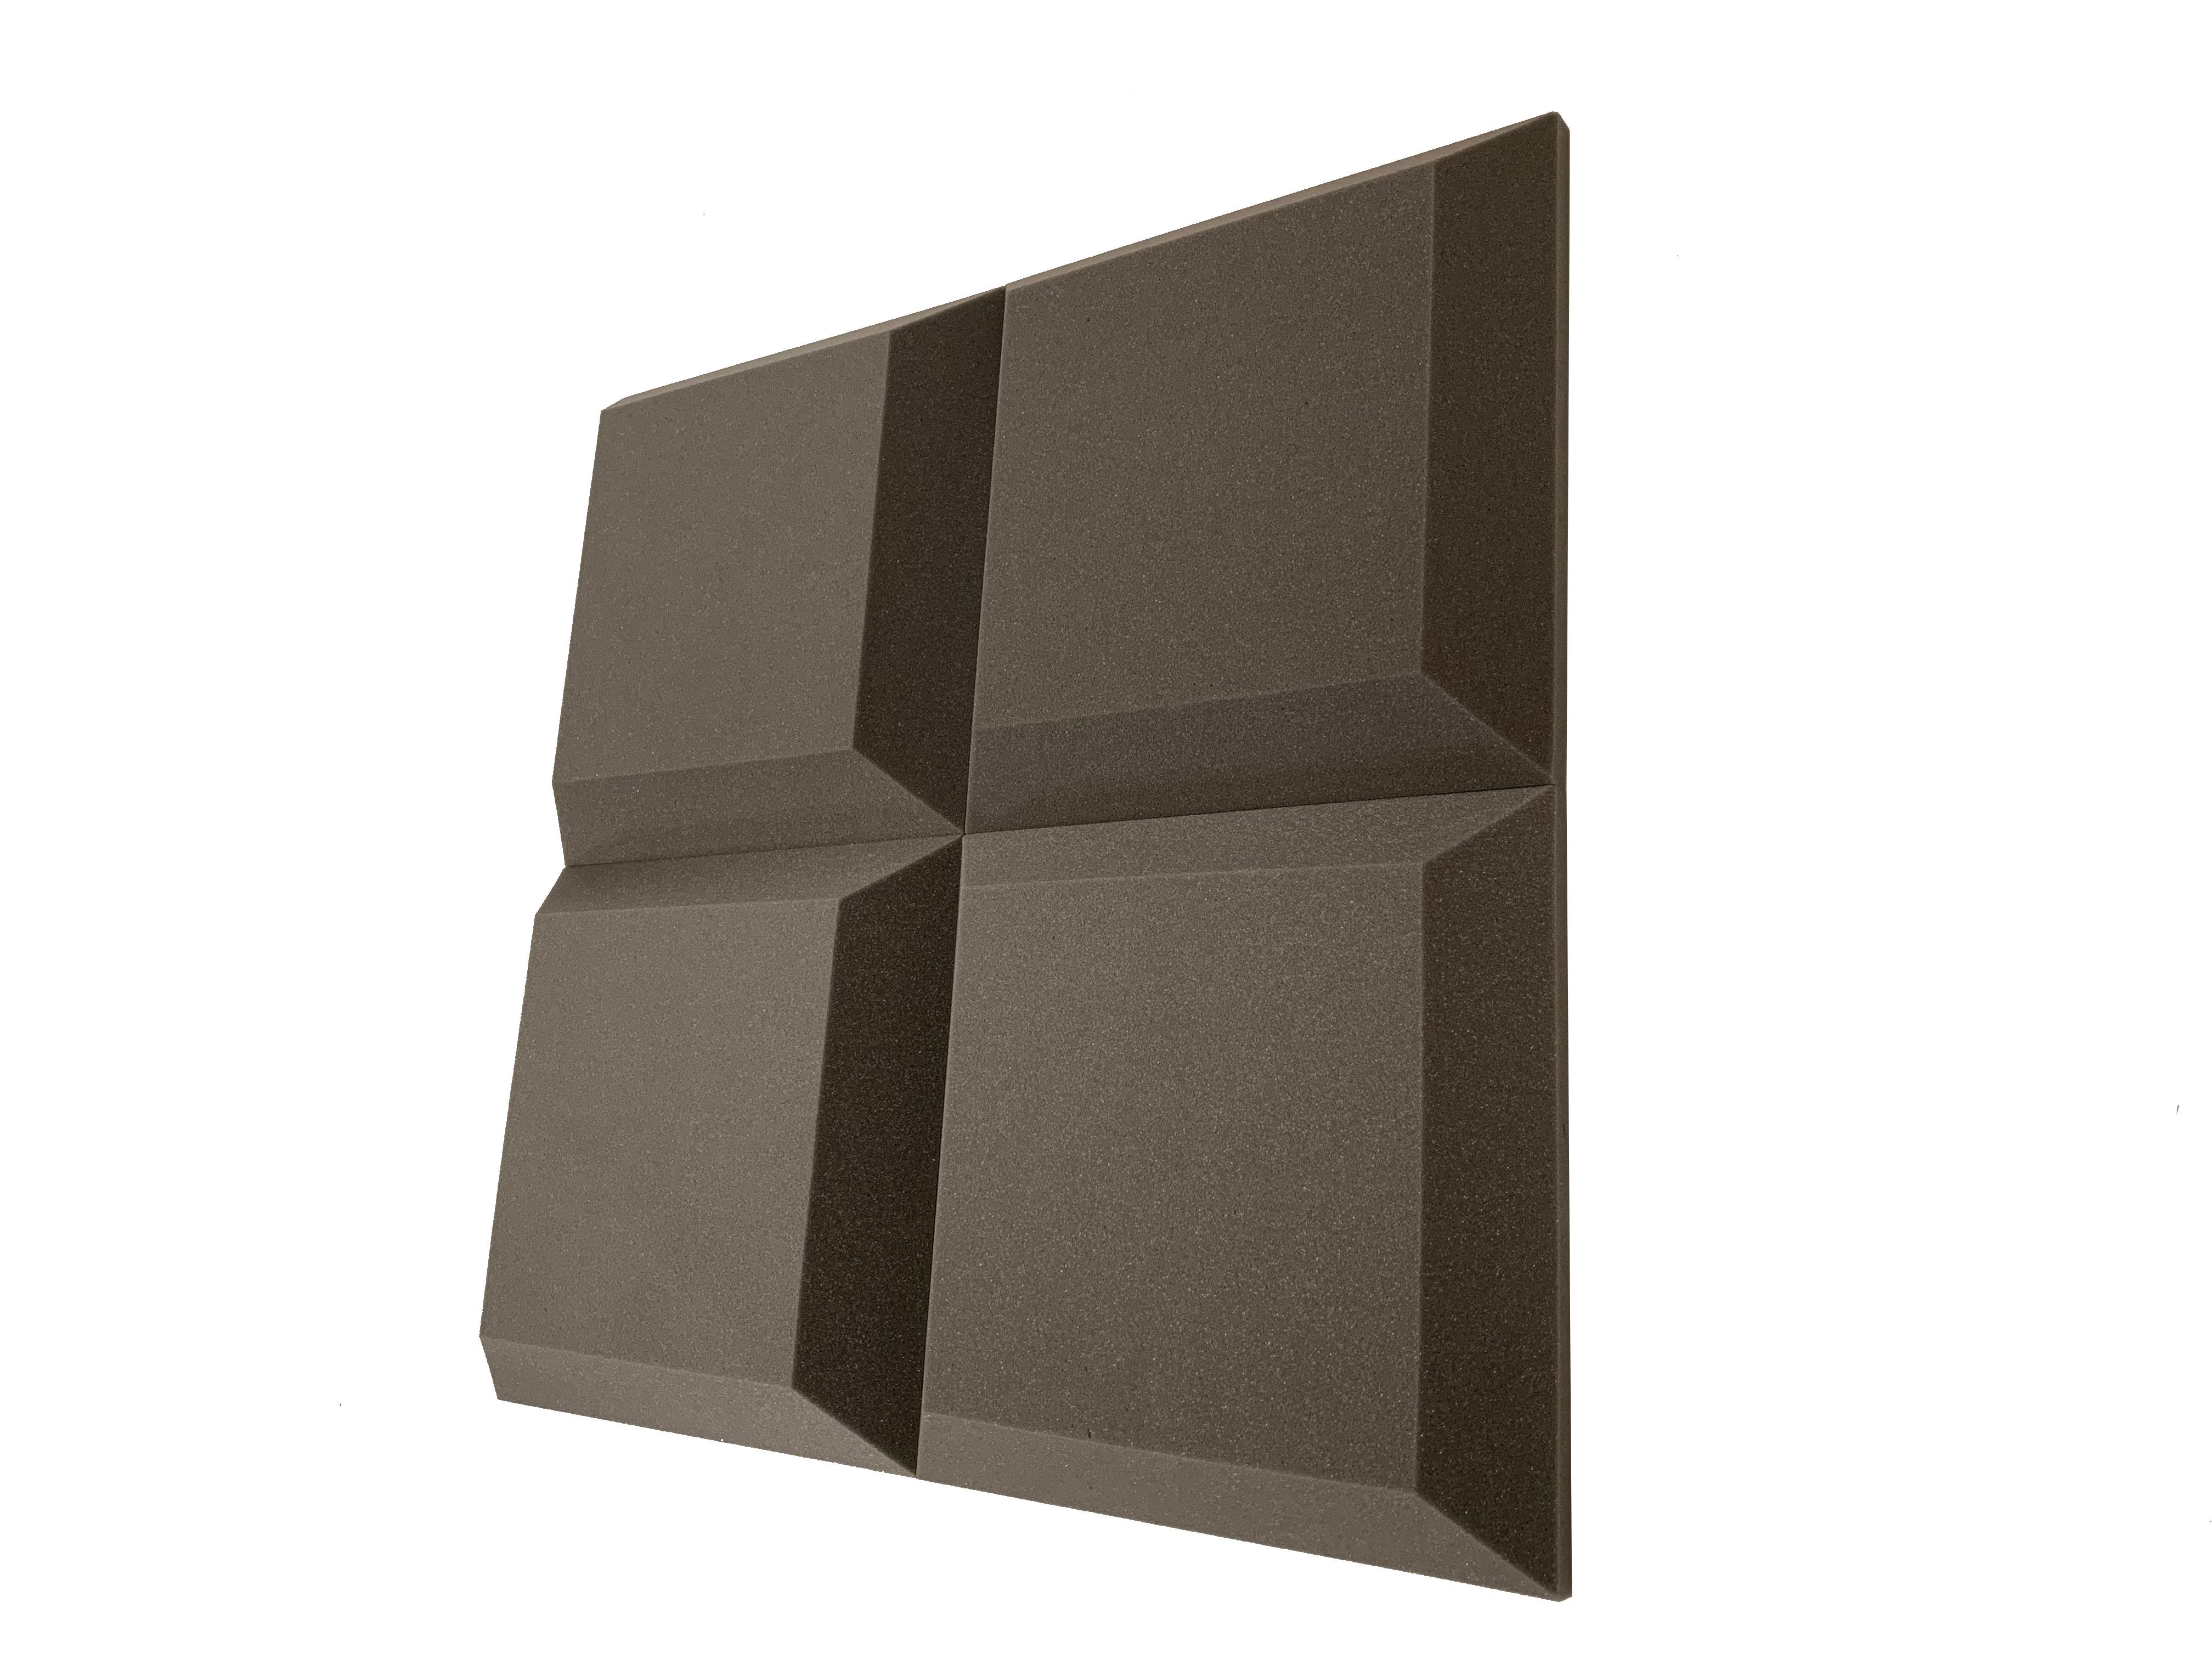 Euphonic Wedge PRO Acoustic Studio Foam Tile Pack - Advanced Acoustics